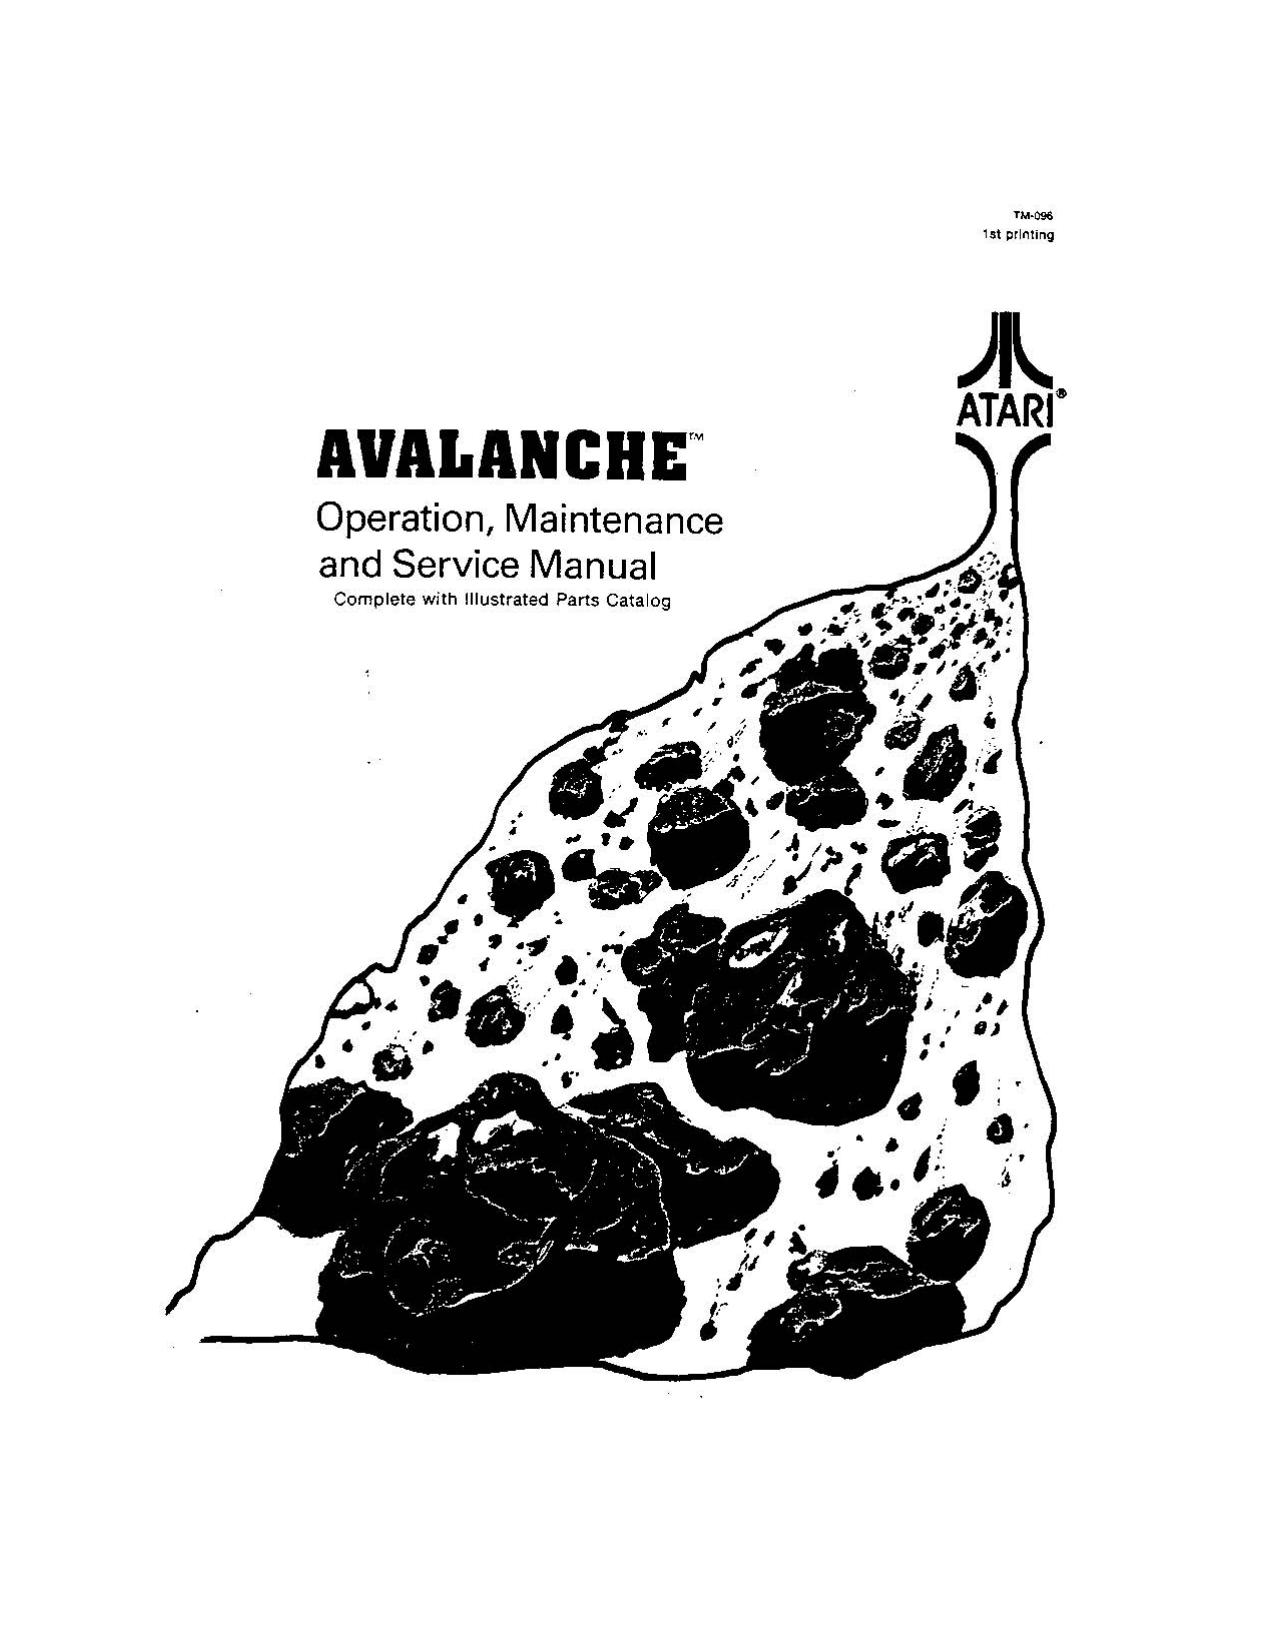 Avalanche (TM-096 1st Printing) (Op-Maint-Serv) (U)